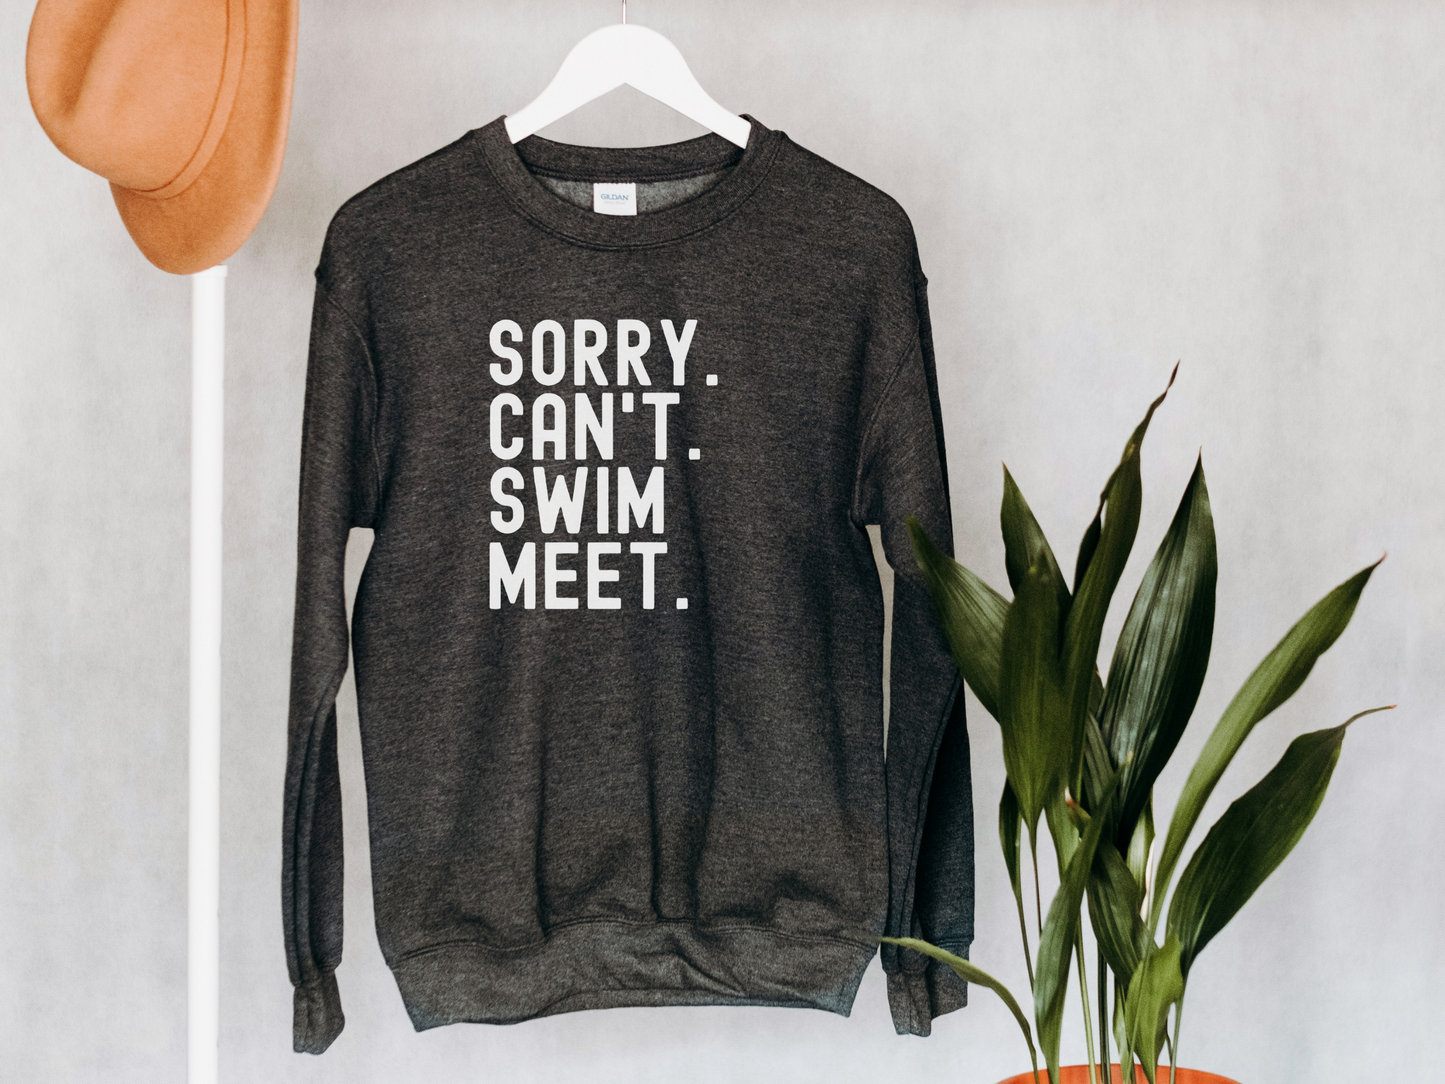 Sorry. Can't. Swim Meet.